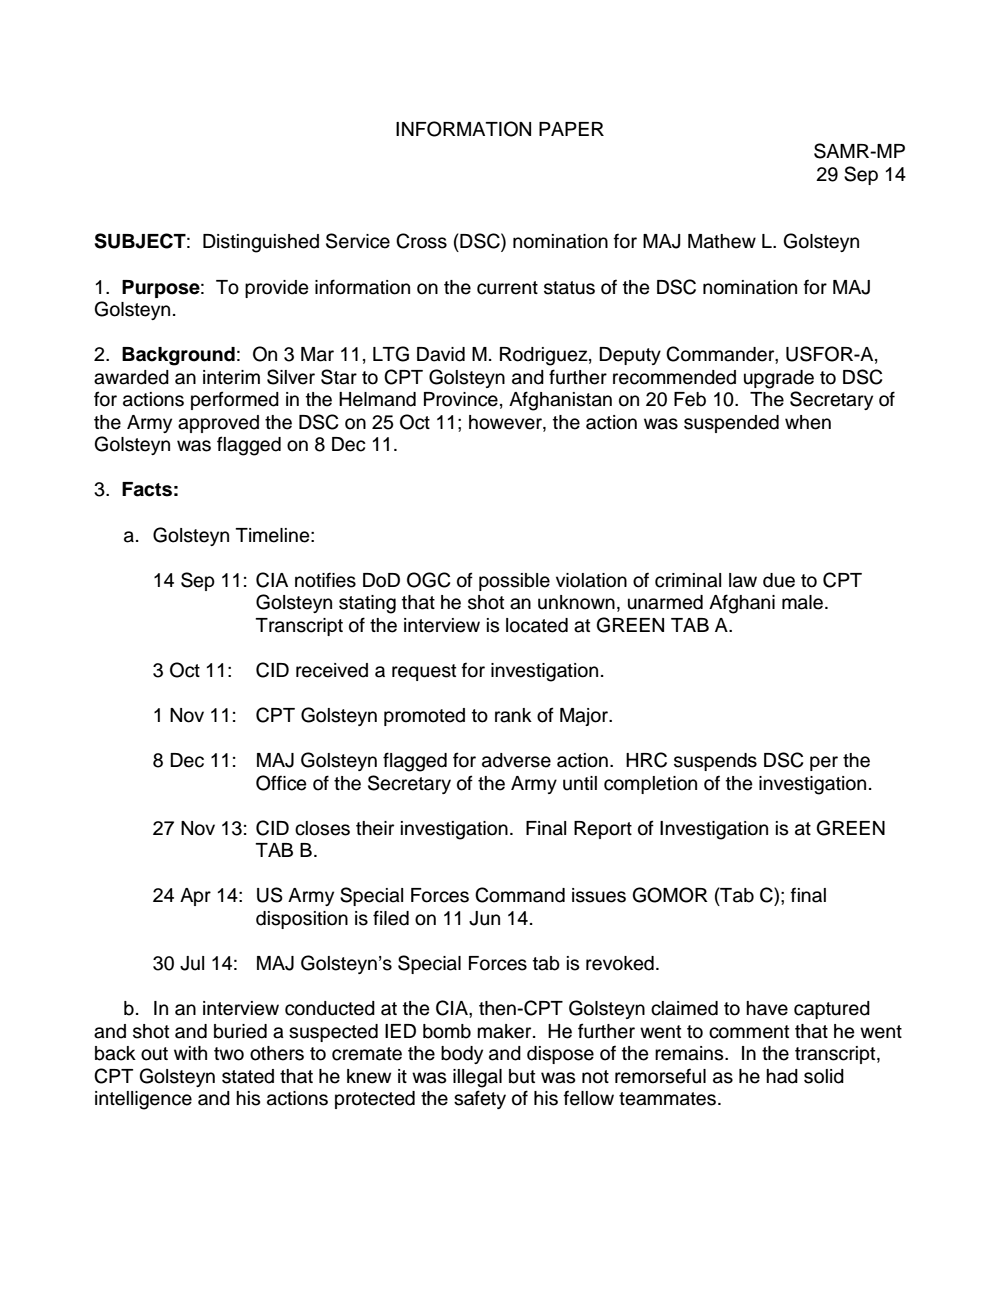 Page 1 from U.S. Army Documents on Major Mathew Golsteyn